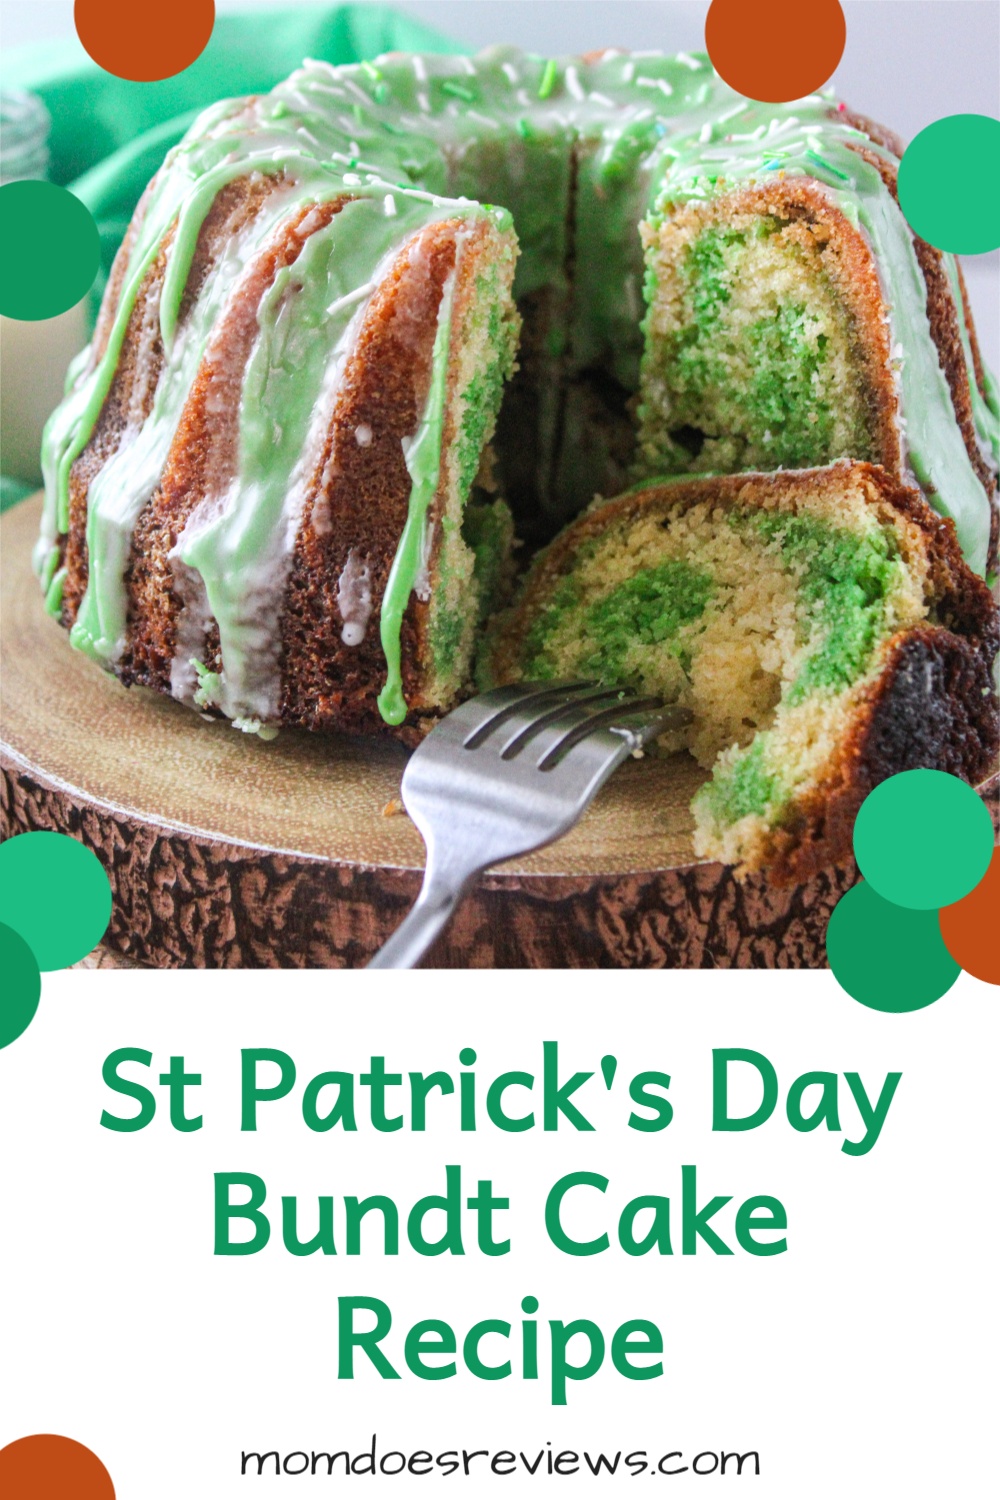 St Patrick's Day Bundt Cake